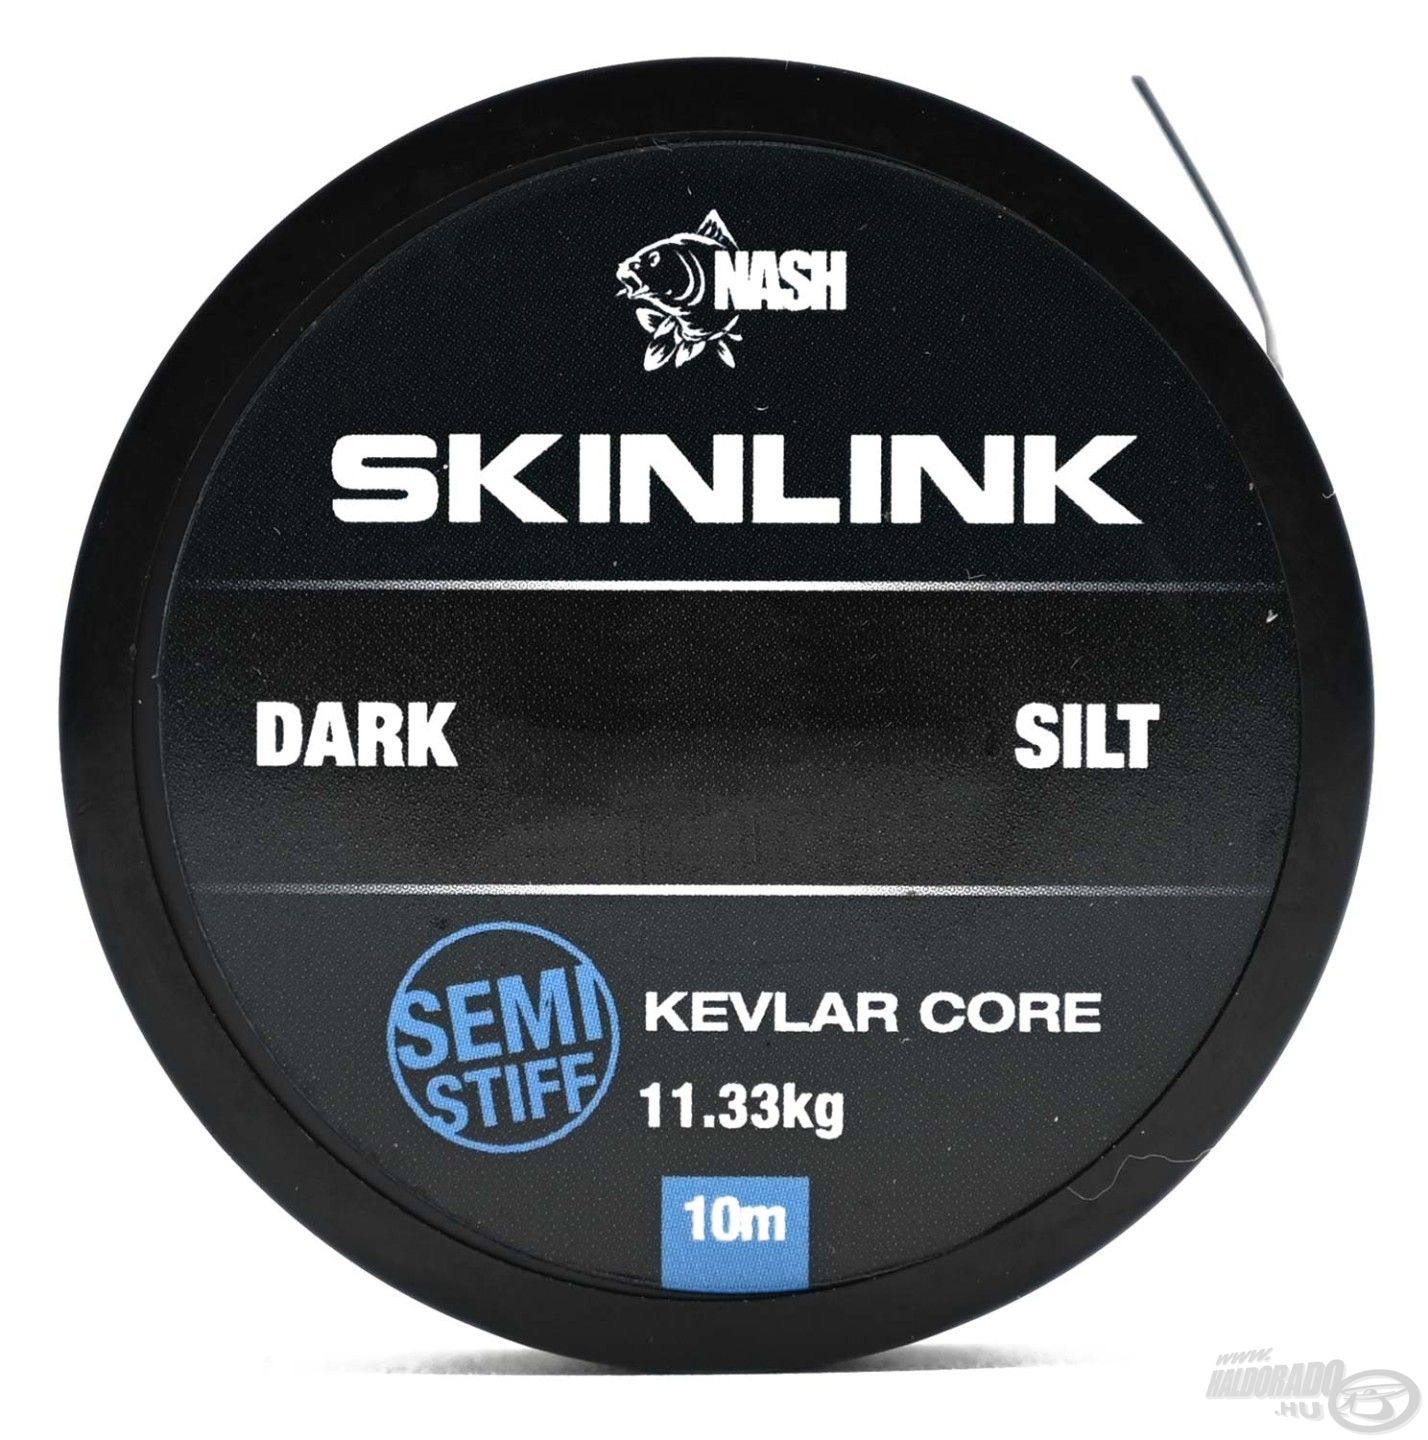 Skinlink Semi-Stiff Silt 10 m